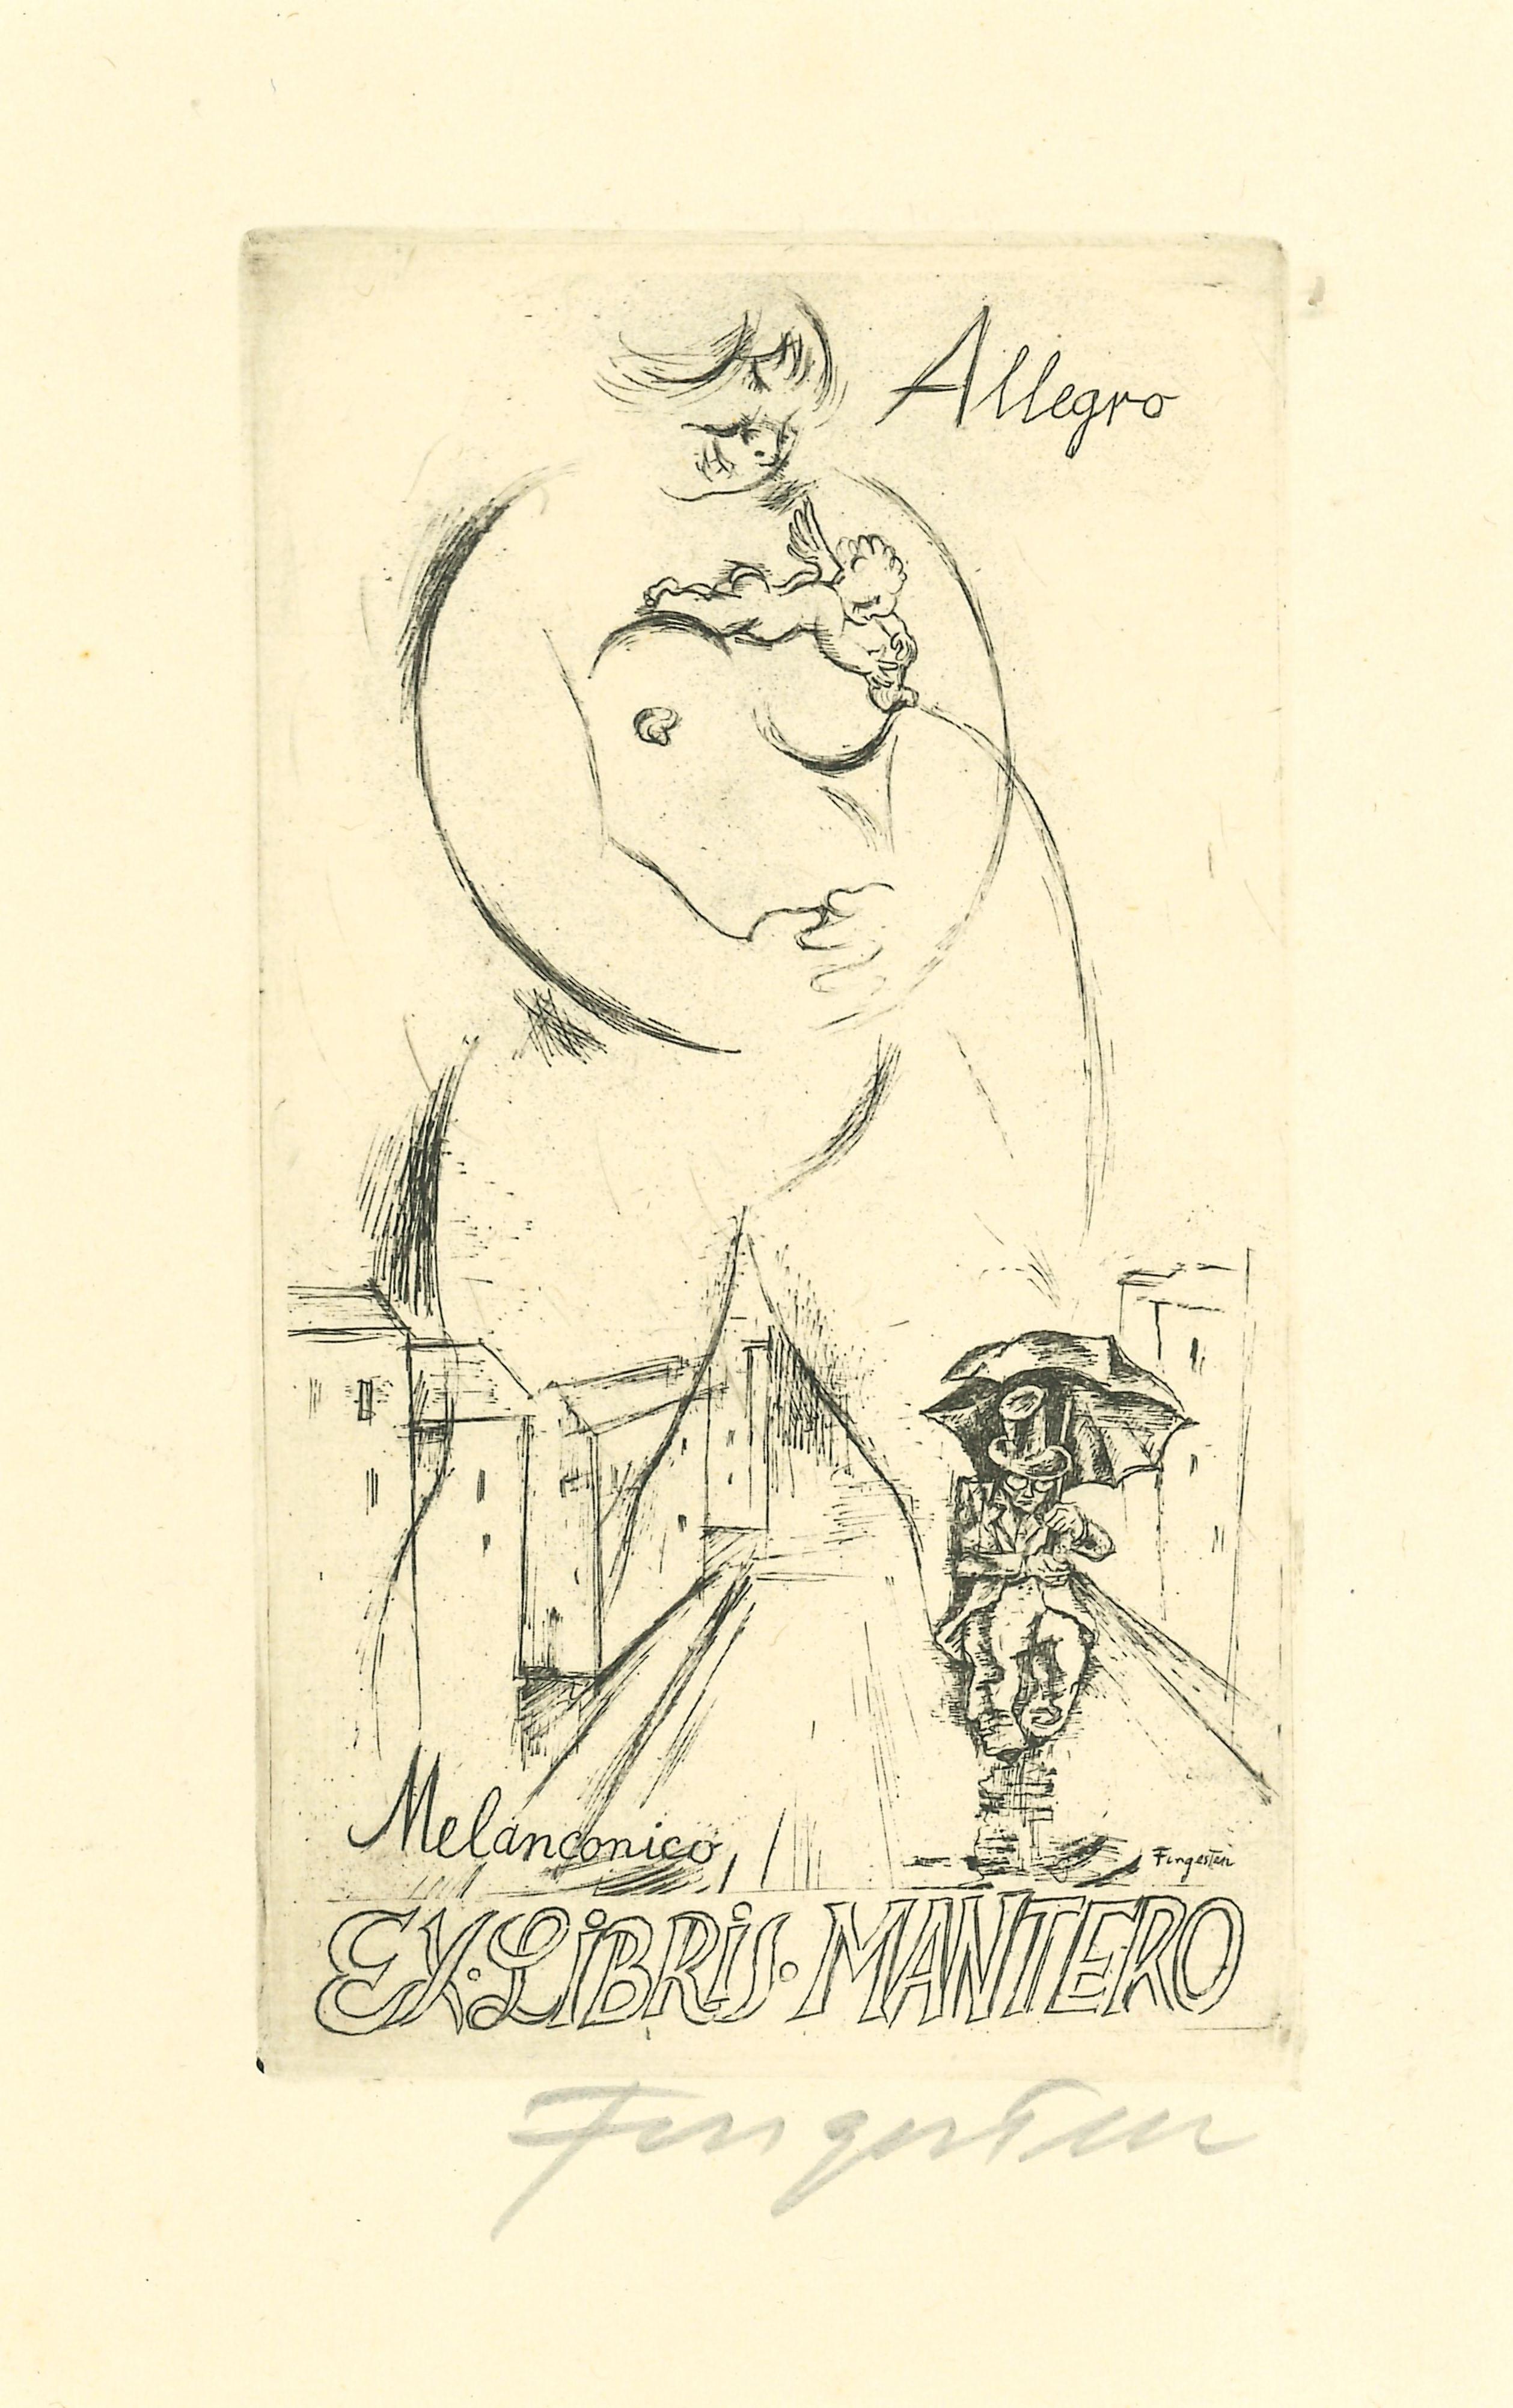 Michel Fingesten Figurative Print - Ex Libris - Allegro Melanconico - Original Etching by M. Fingesten - 1930s